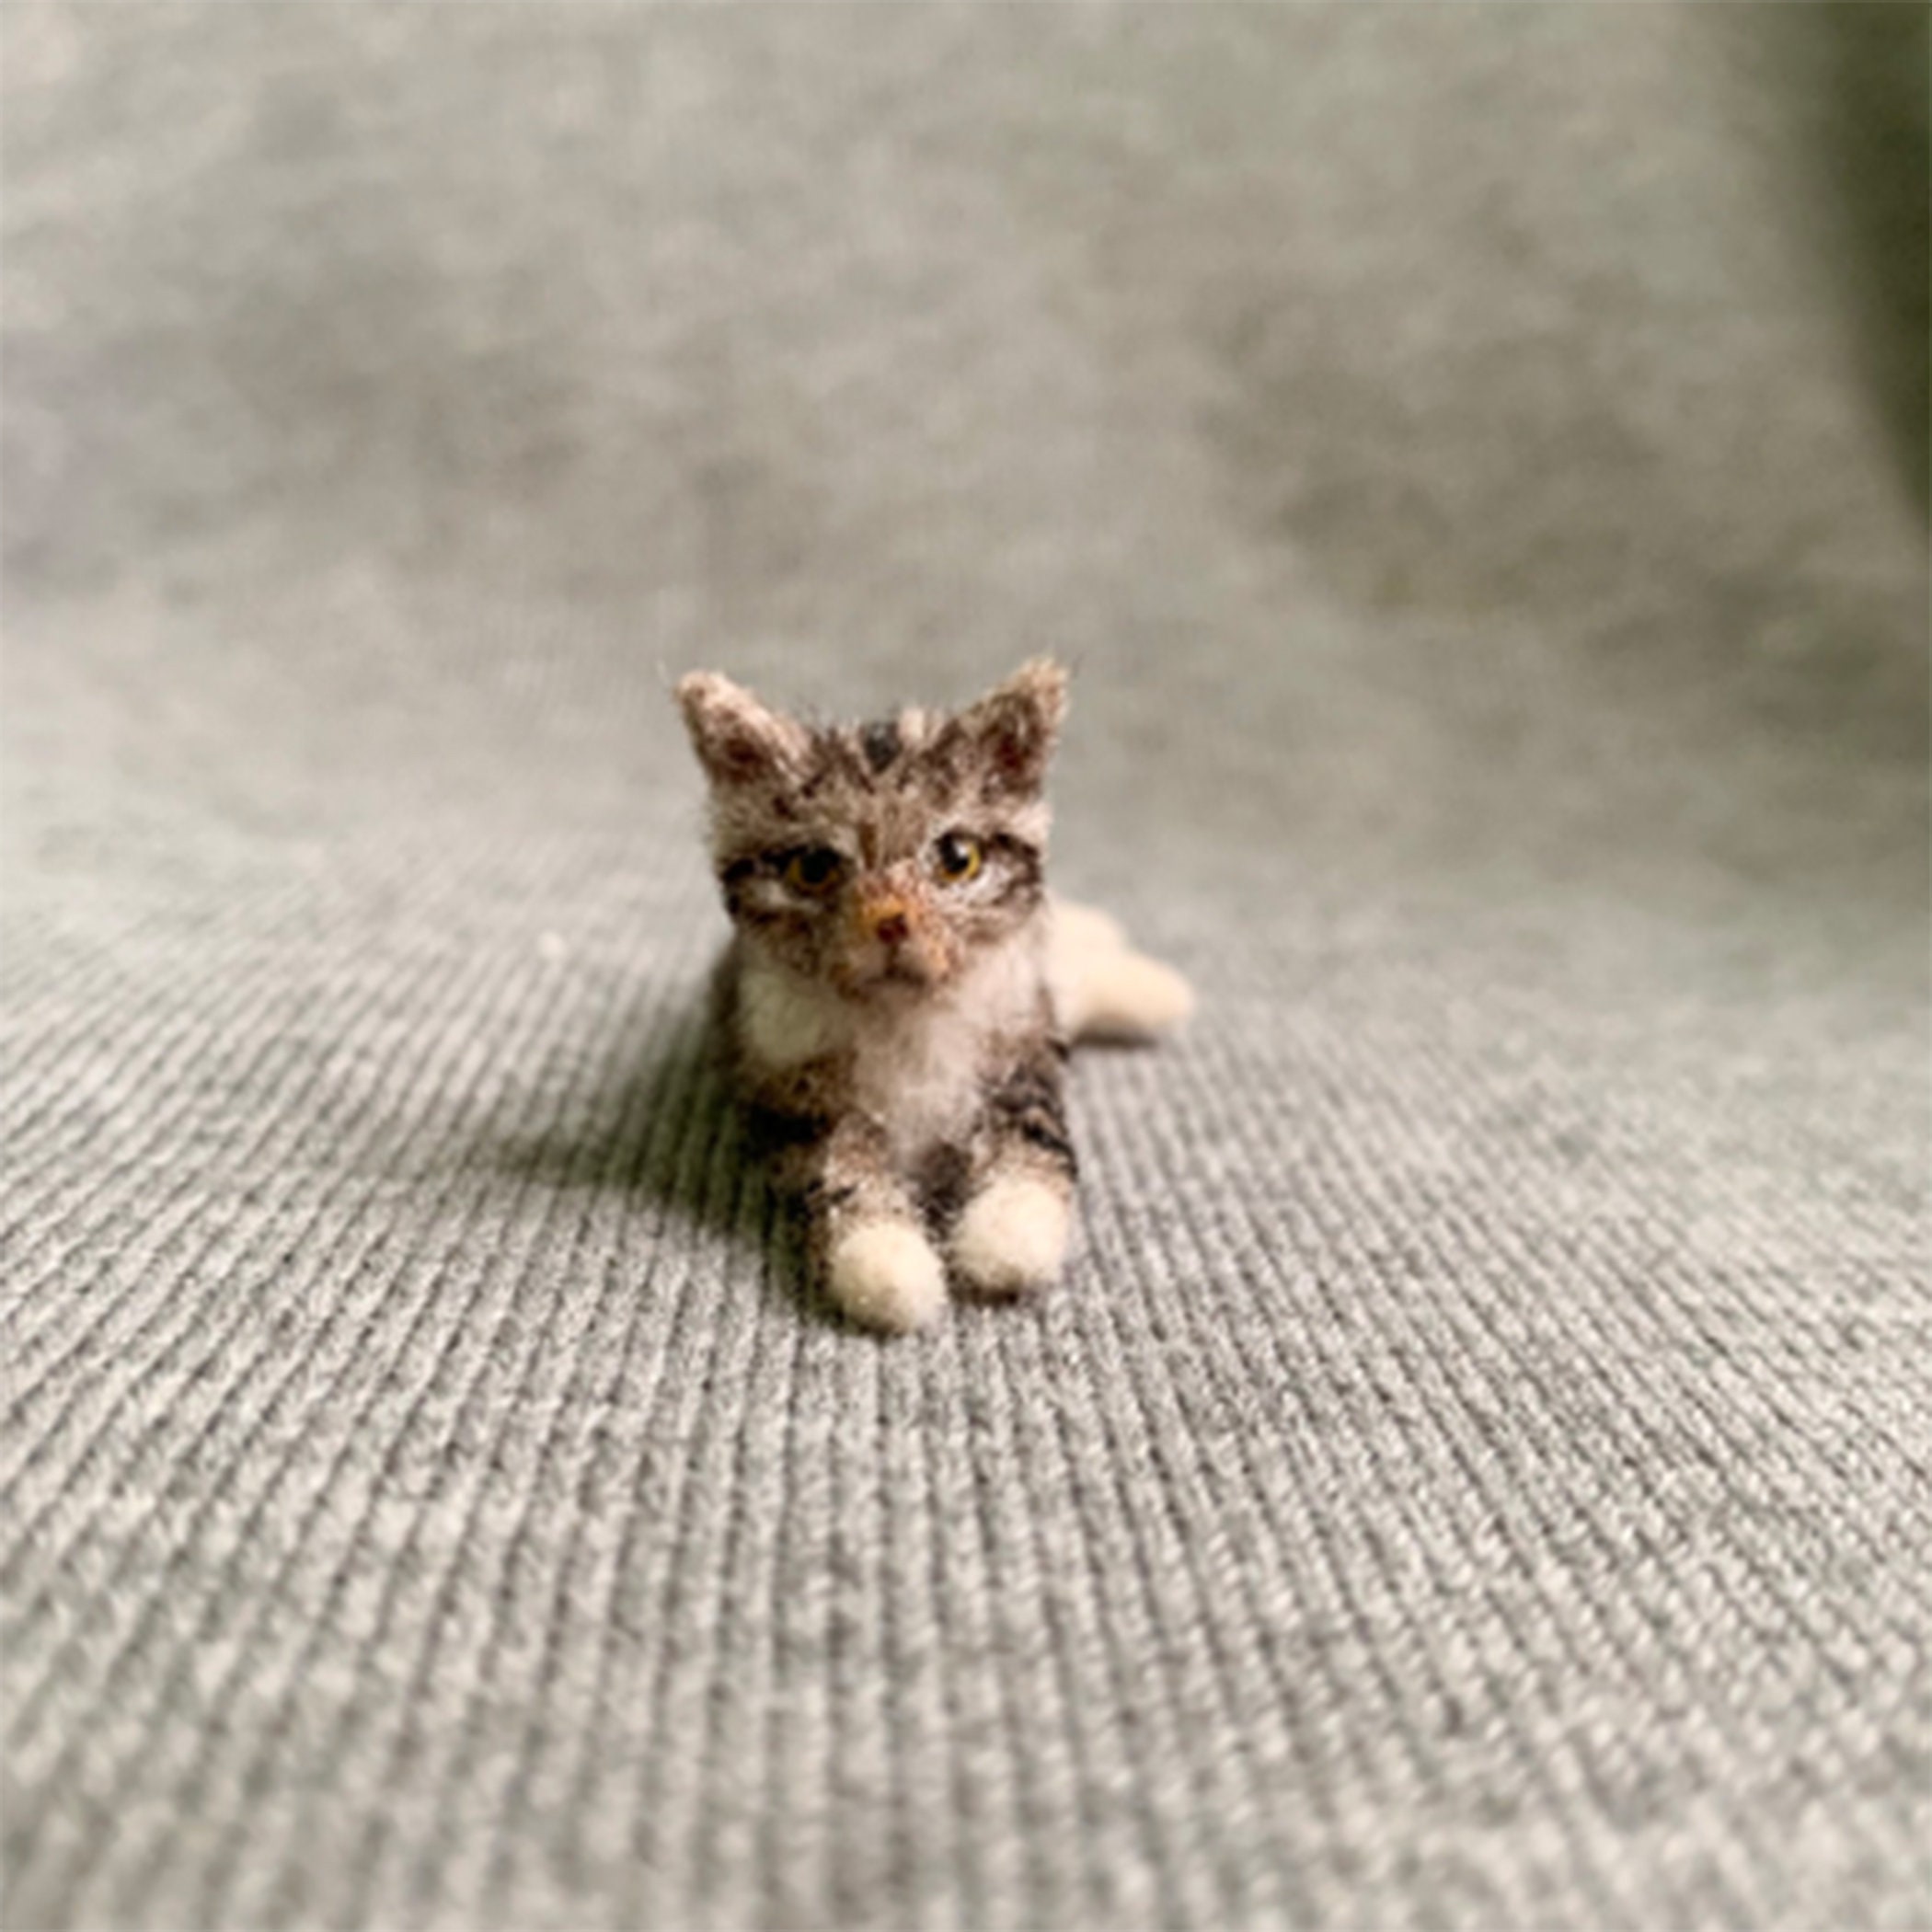 Dollhouse Miniature Half Scale 1:24 Kitty Cat Orange & White Pet Kitten Standing 